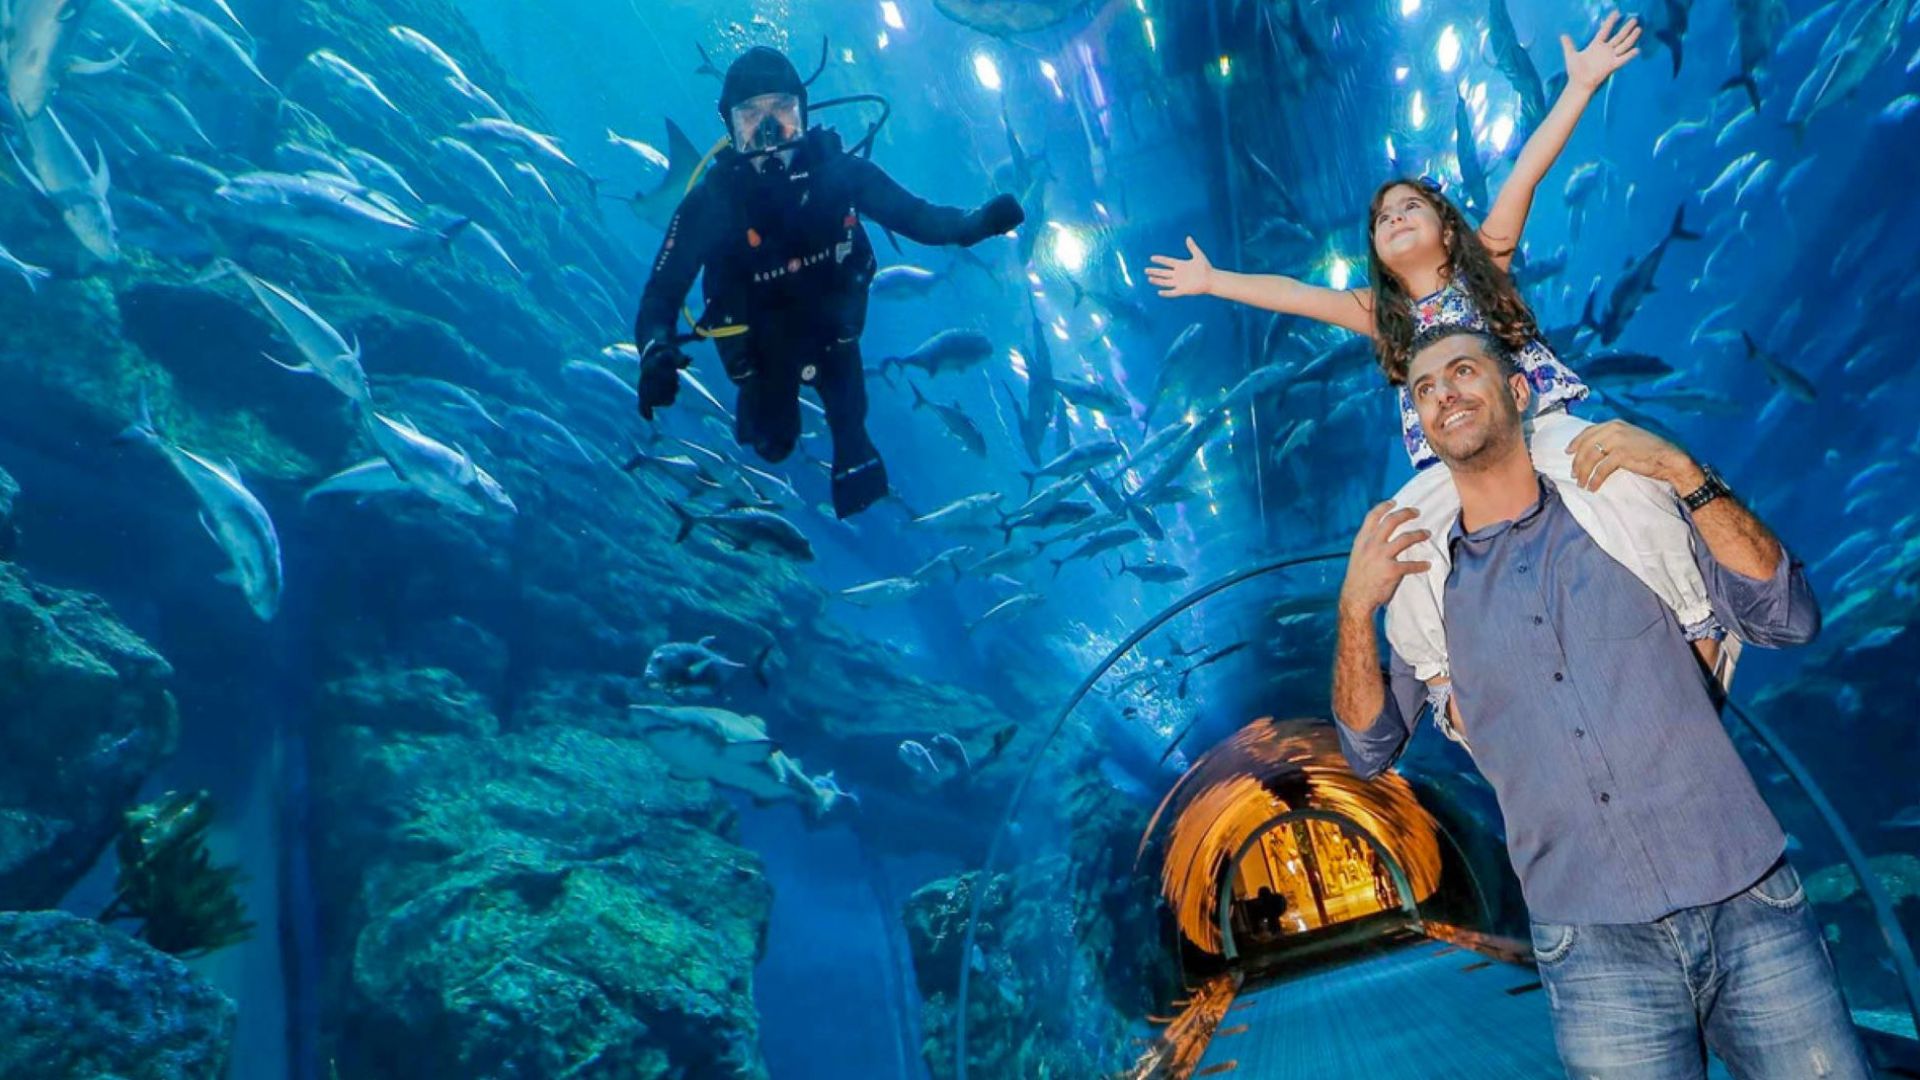 10 Best Zoos & Aquariums in Dubai.jpg